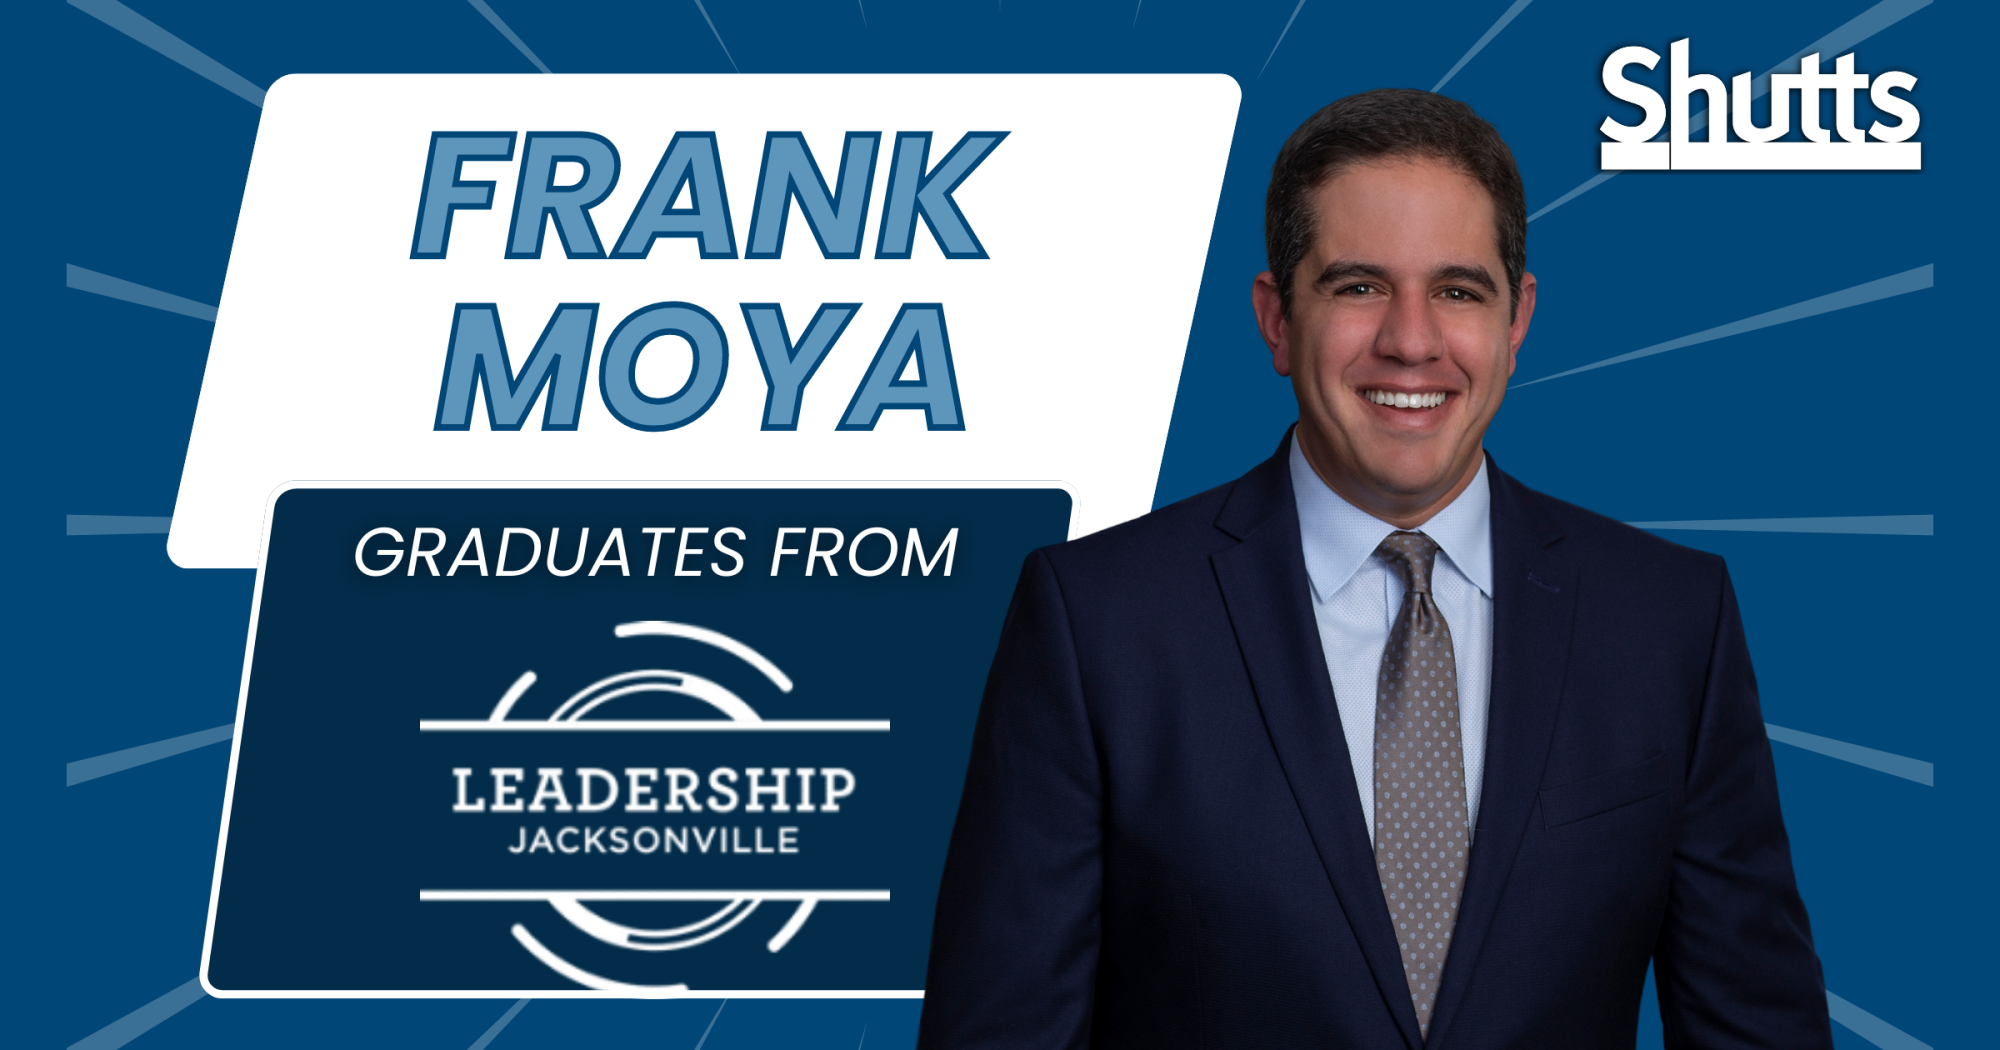 Frank Moya Graduates from Leadership Jacksonville